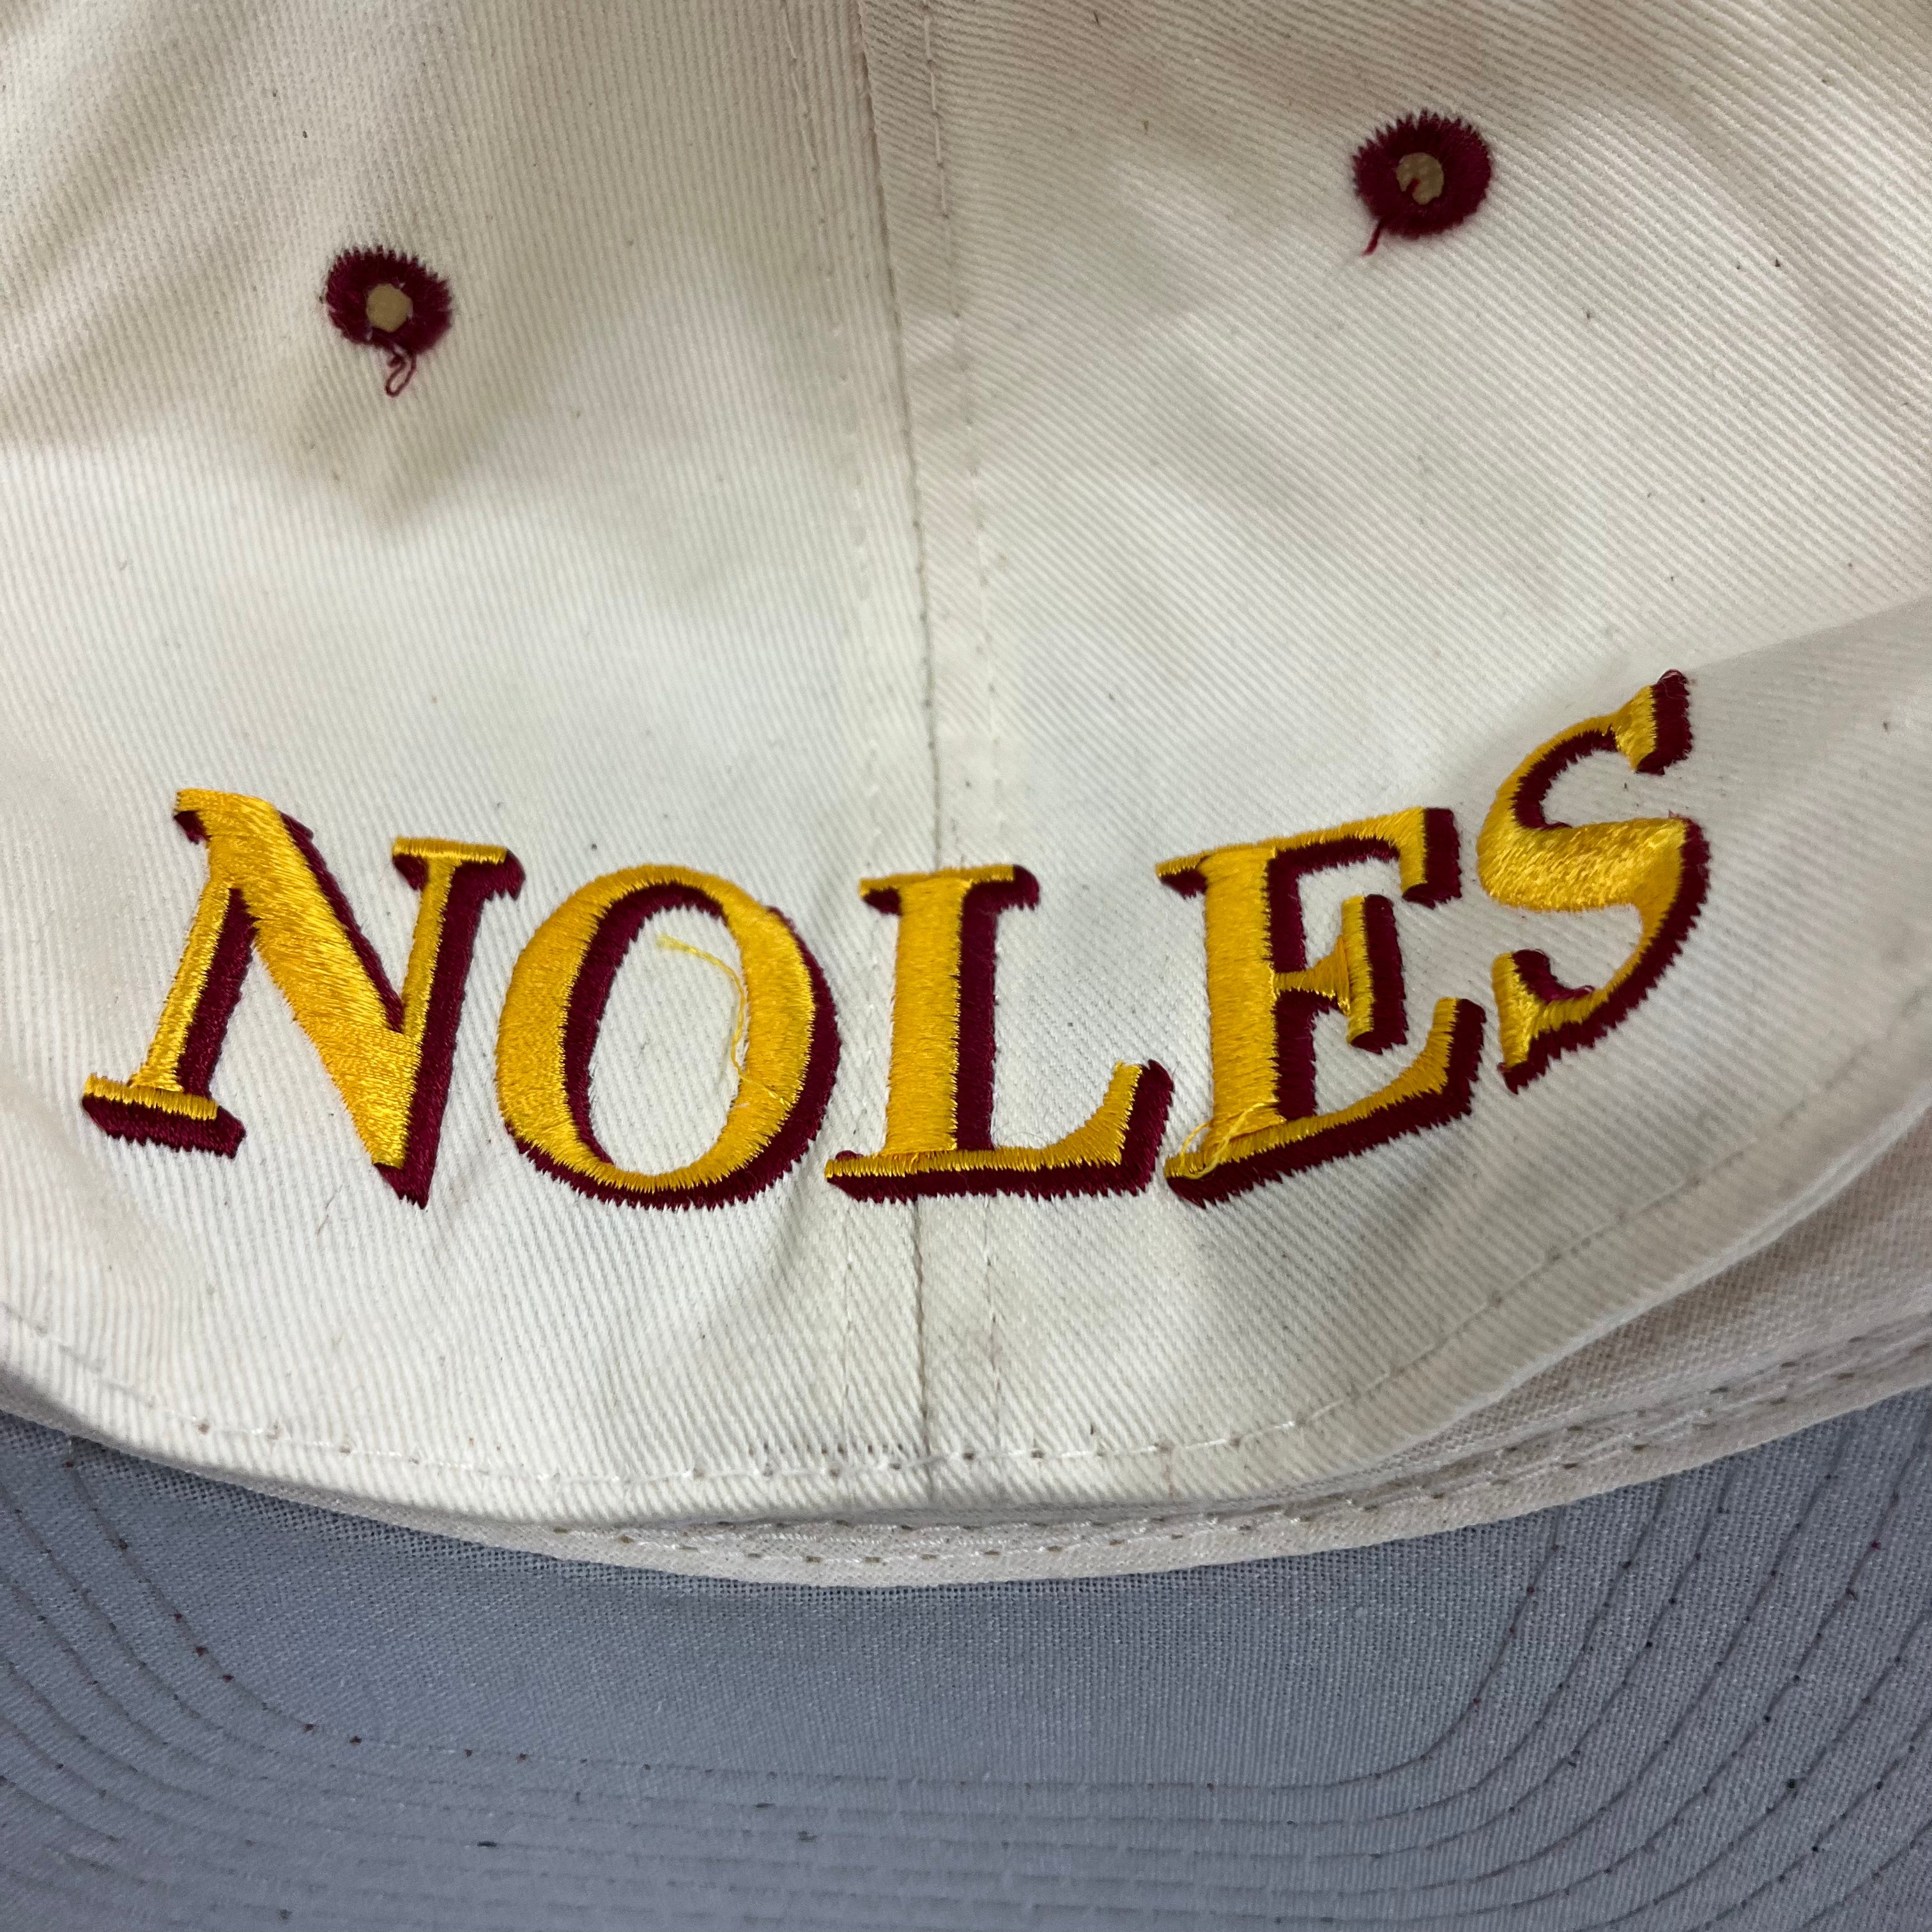 FSU Vintage Embroidered Seminoles Baseball Jersey